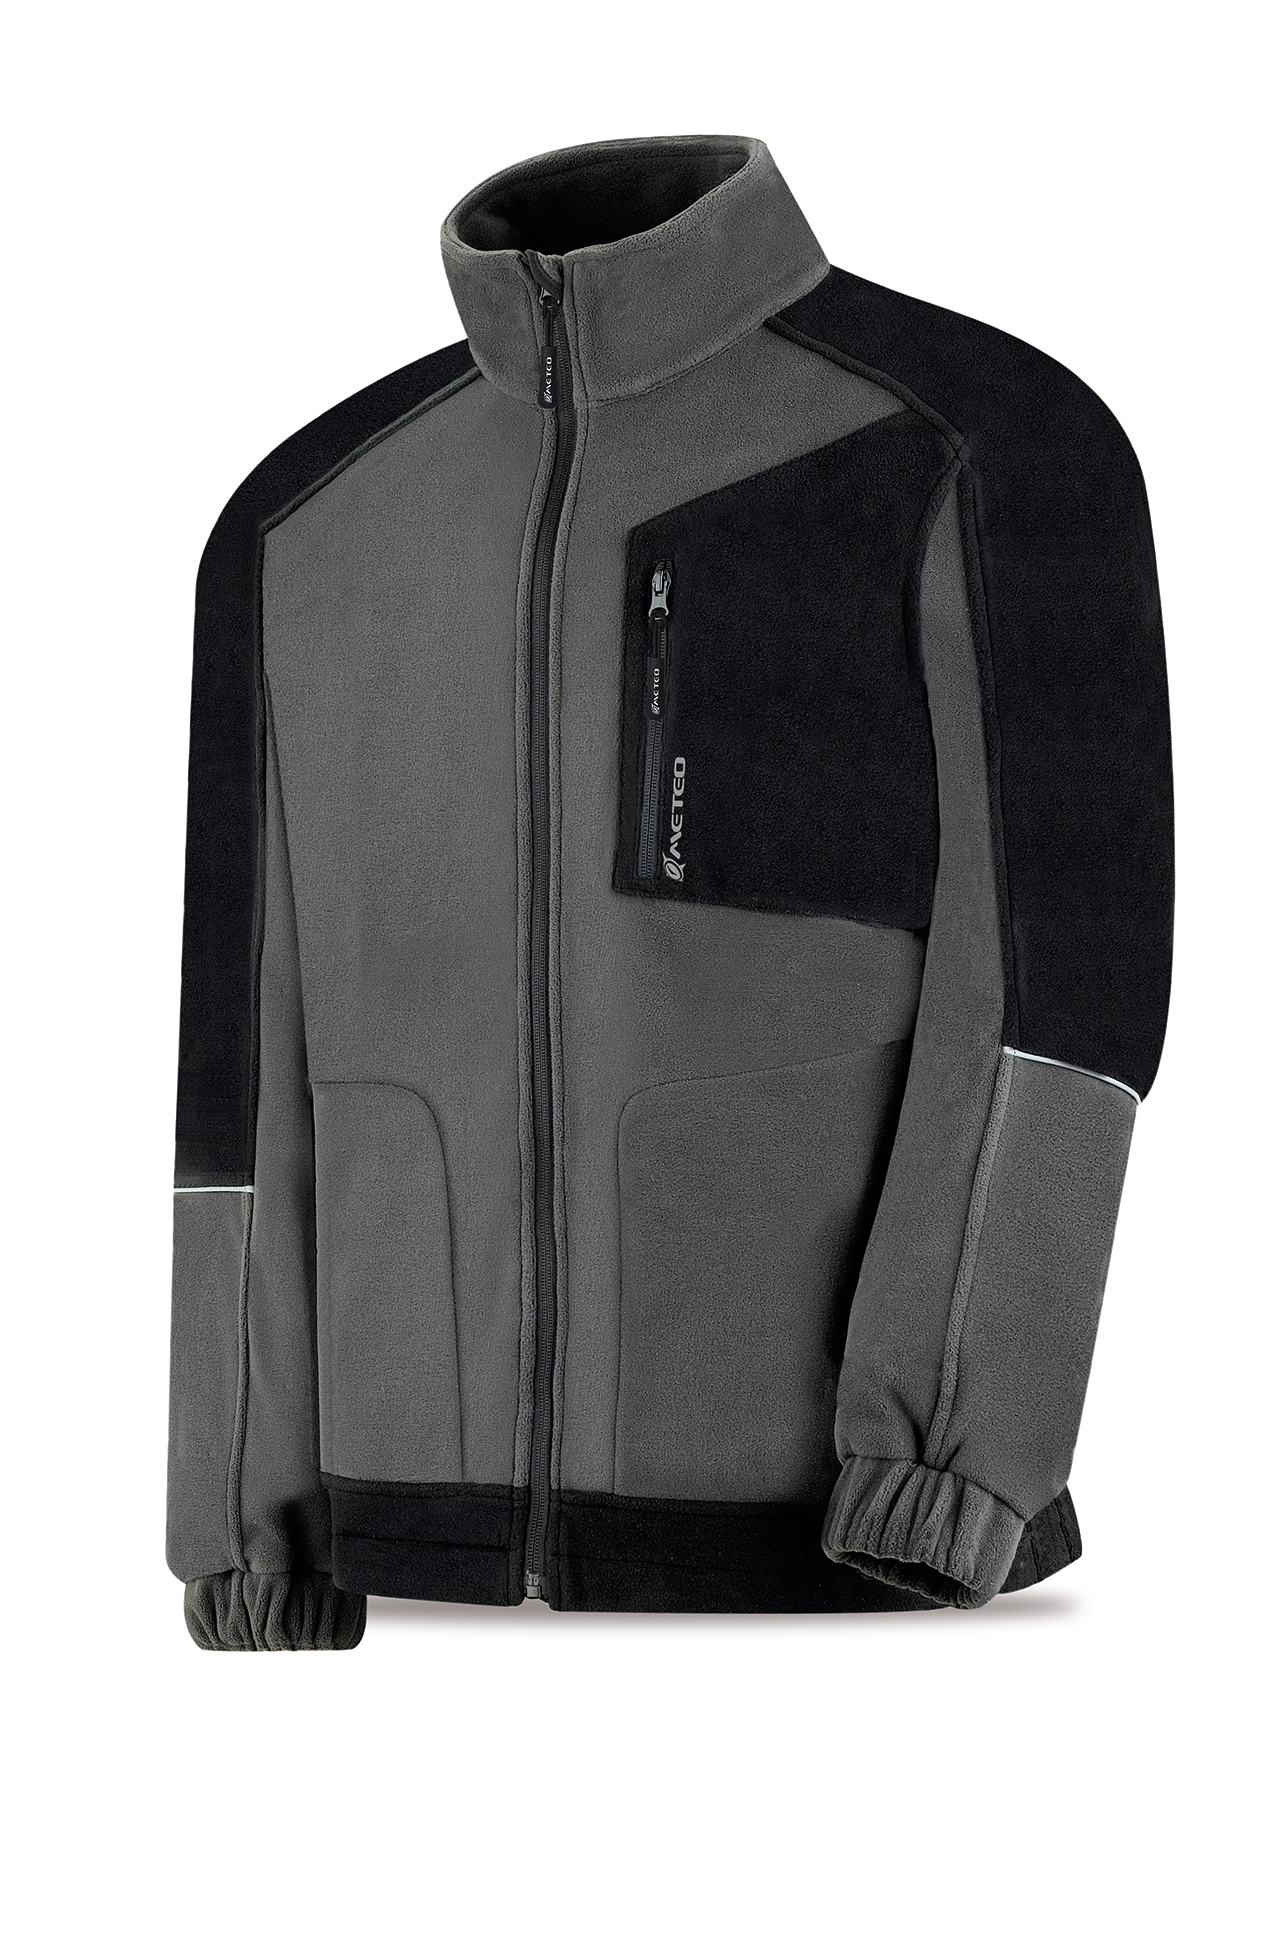 288-CHPPGN Coats and Rain Gear Solar Jackets VIRACOCHA model fleece jacket. Color Grey/Black.